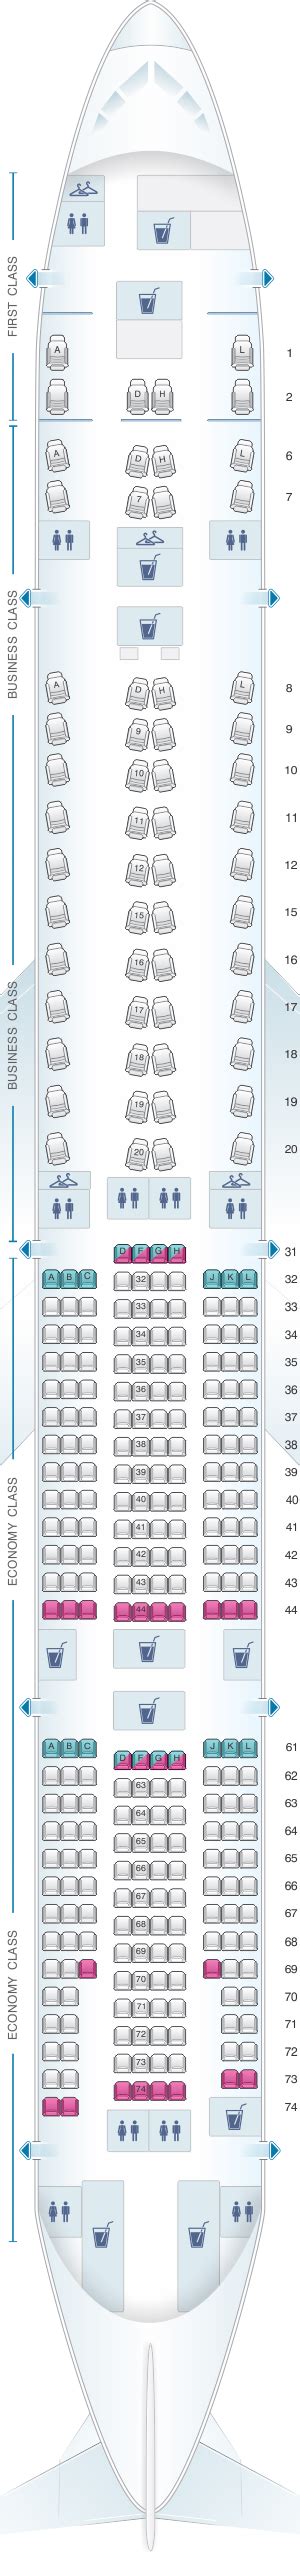 Boeing 777 Seat Map Air China